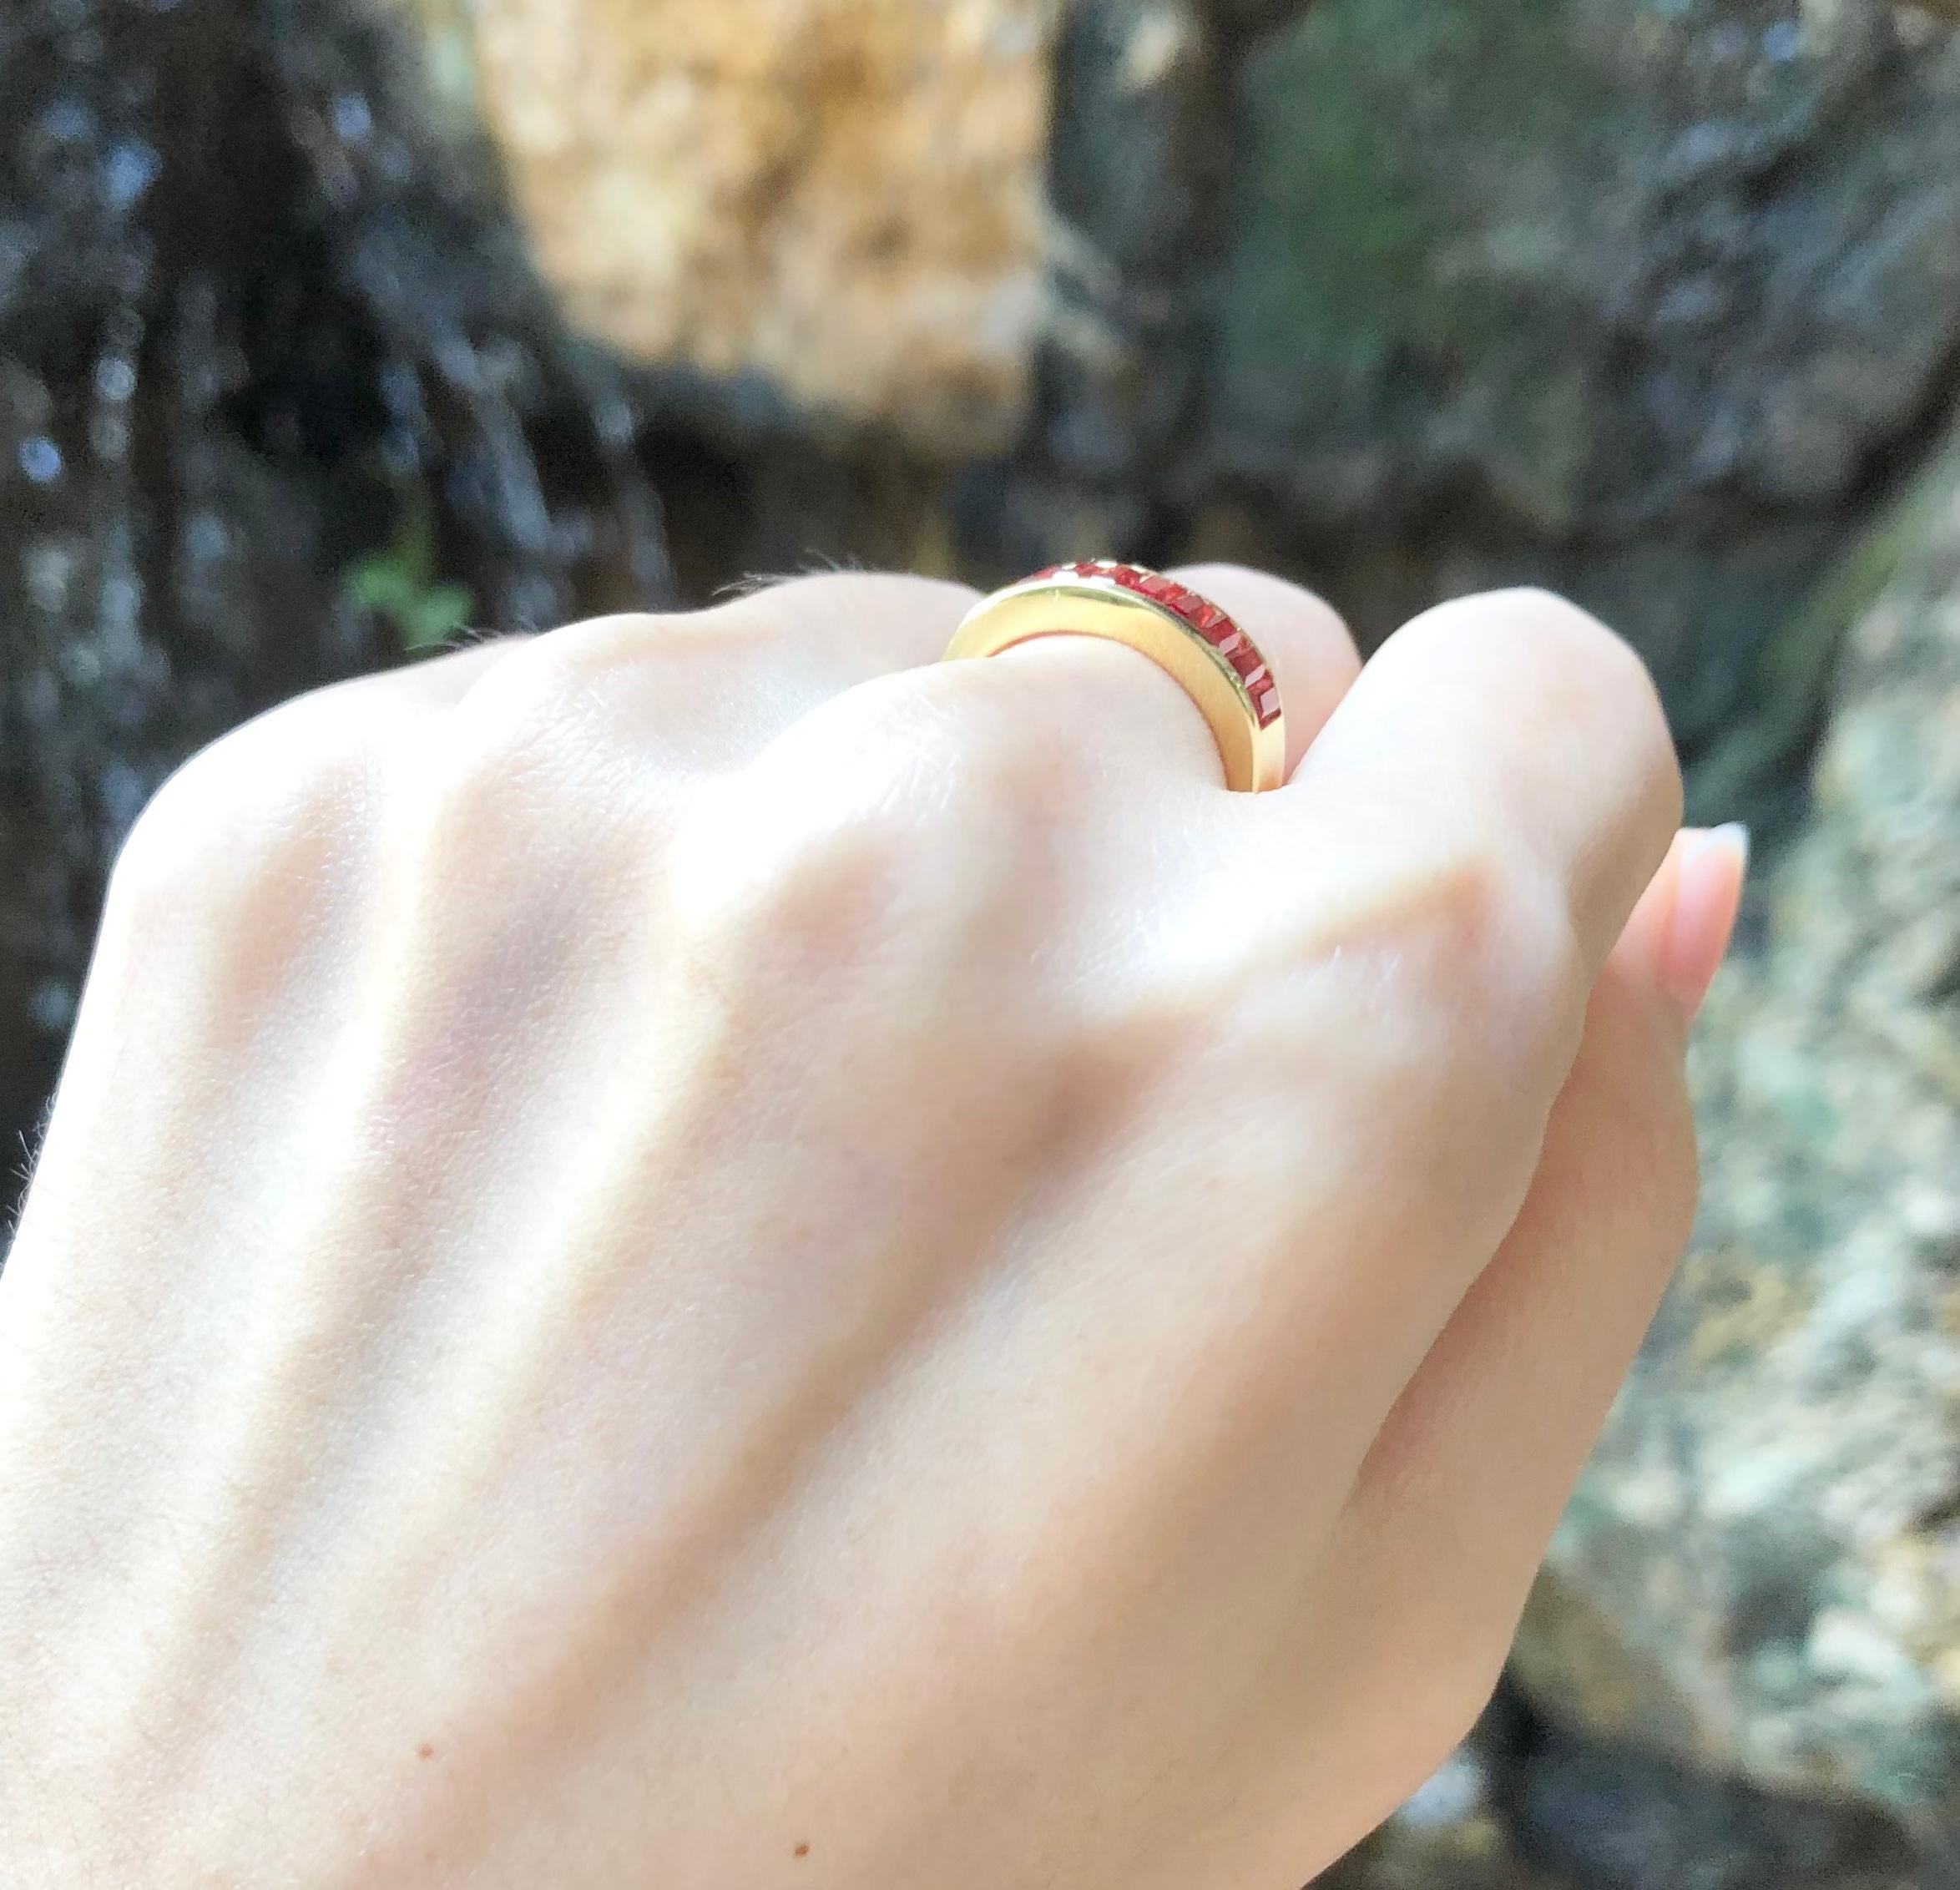 1.9 cm ring size